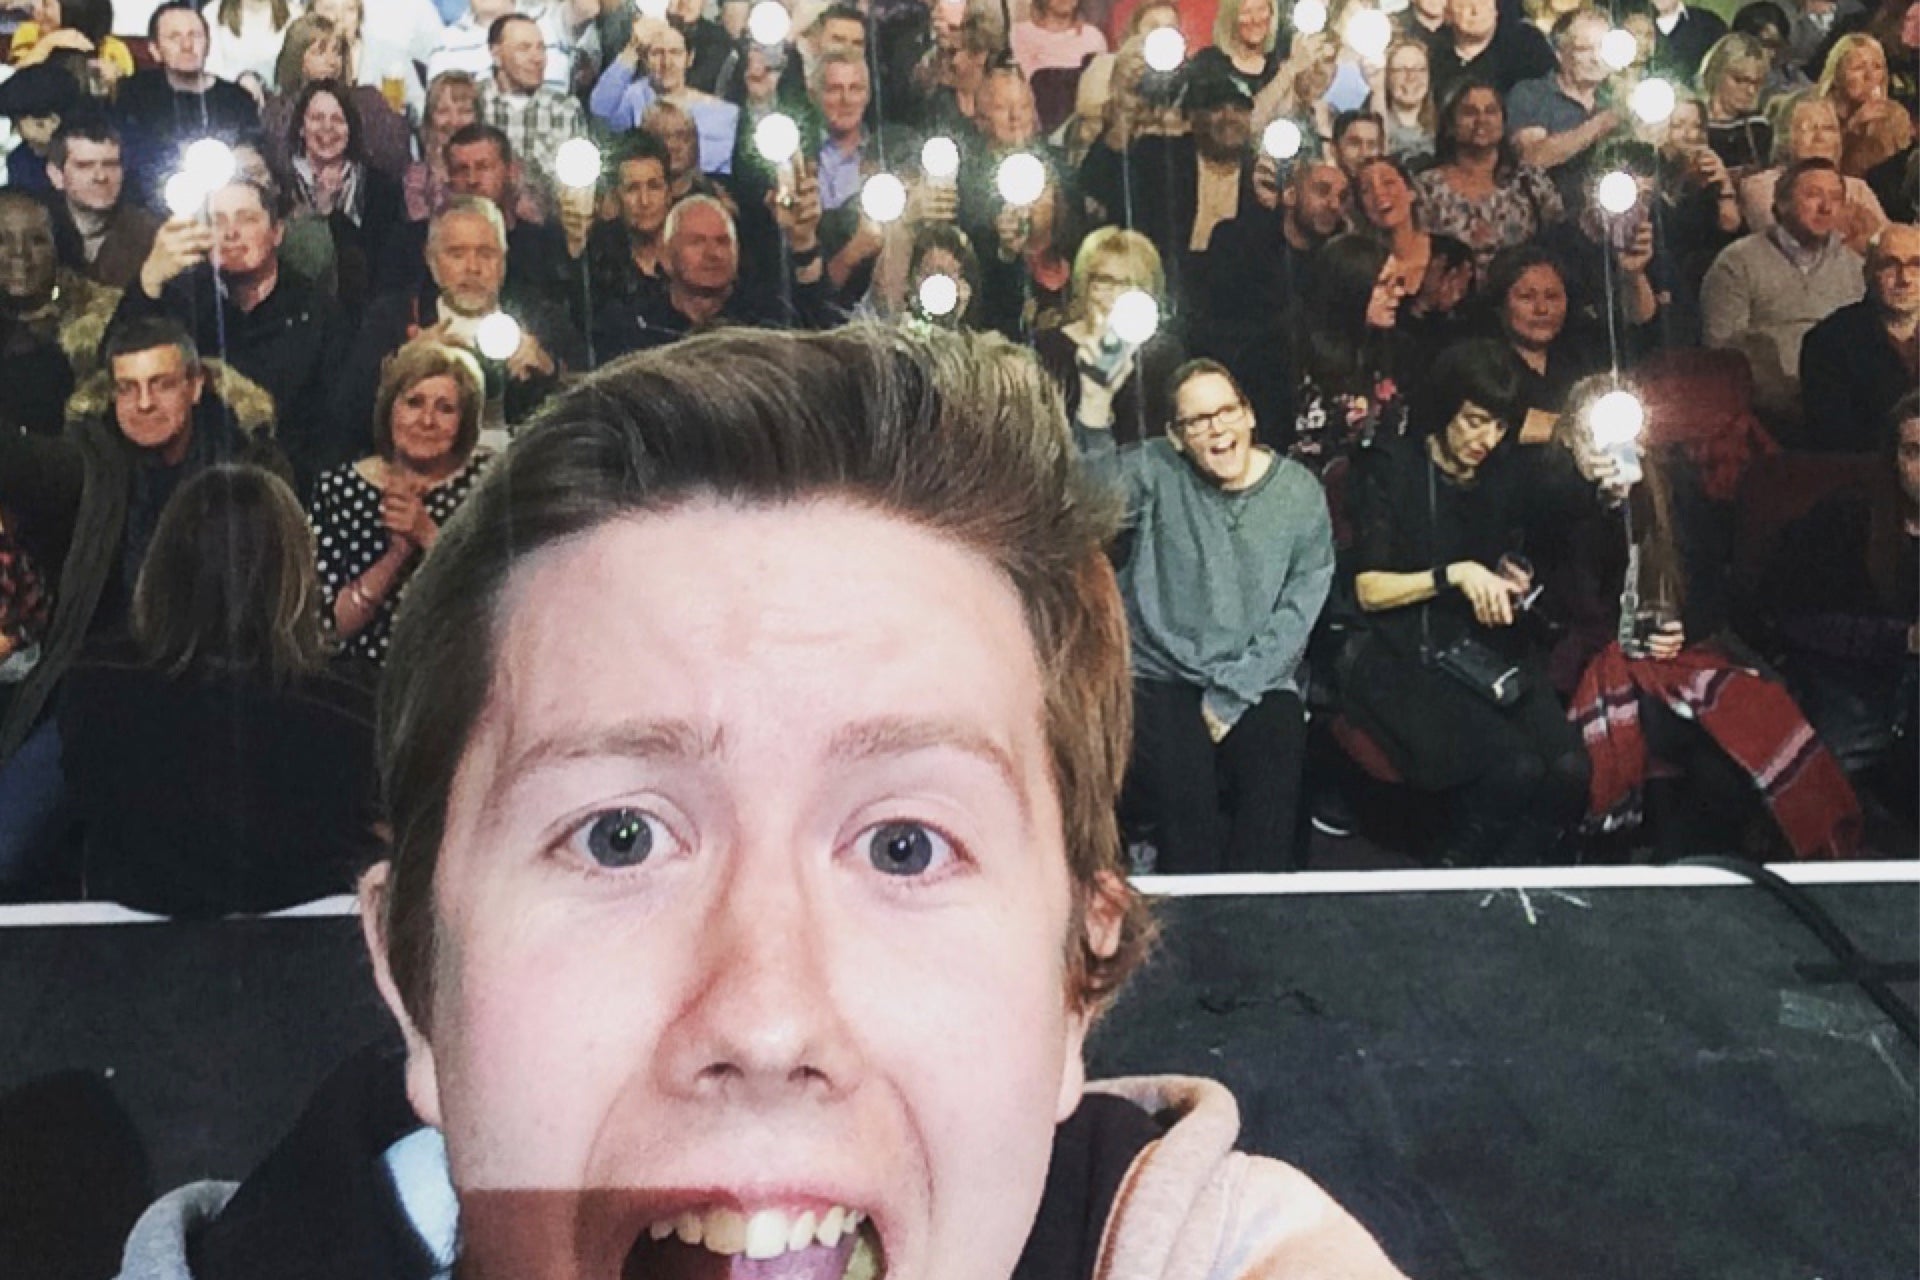 Selfie in crowd